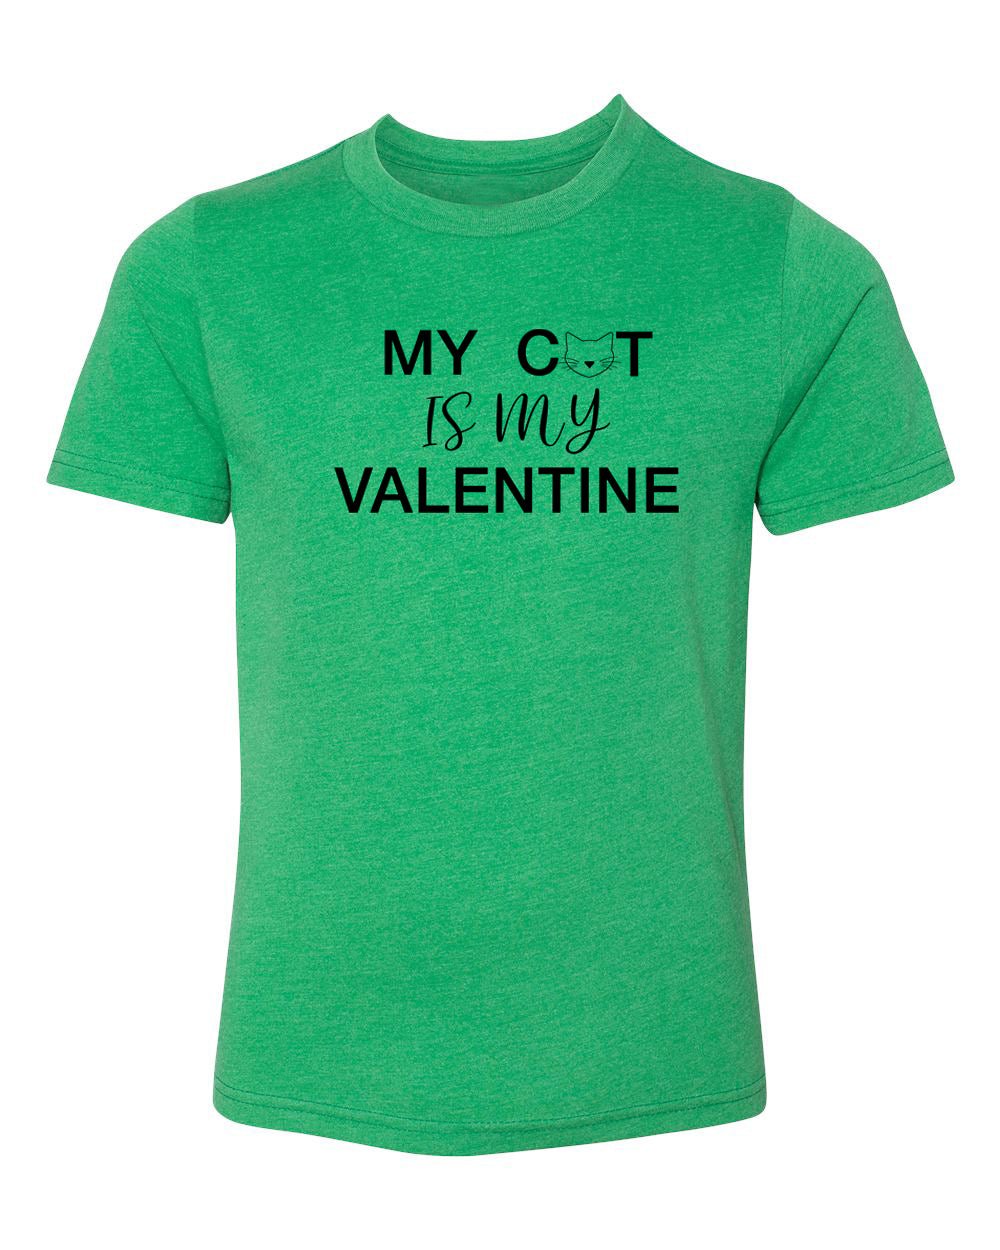 My Cat Is My Valentine Kids T Shirts - Mato & Hash